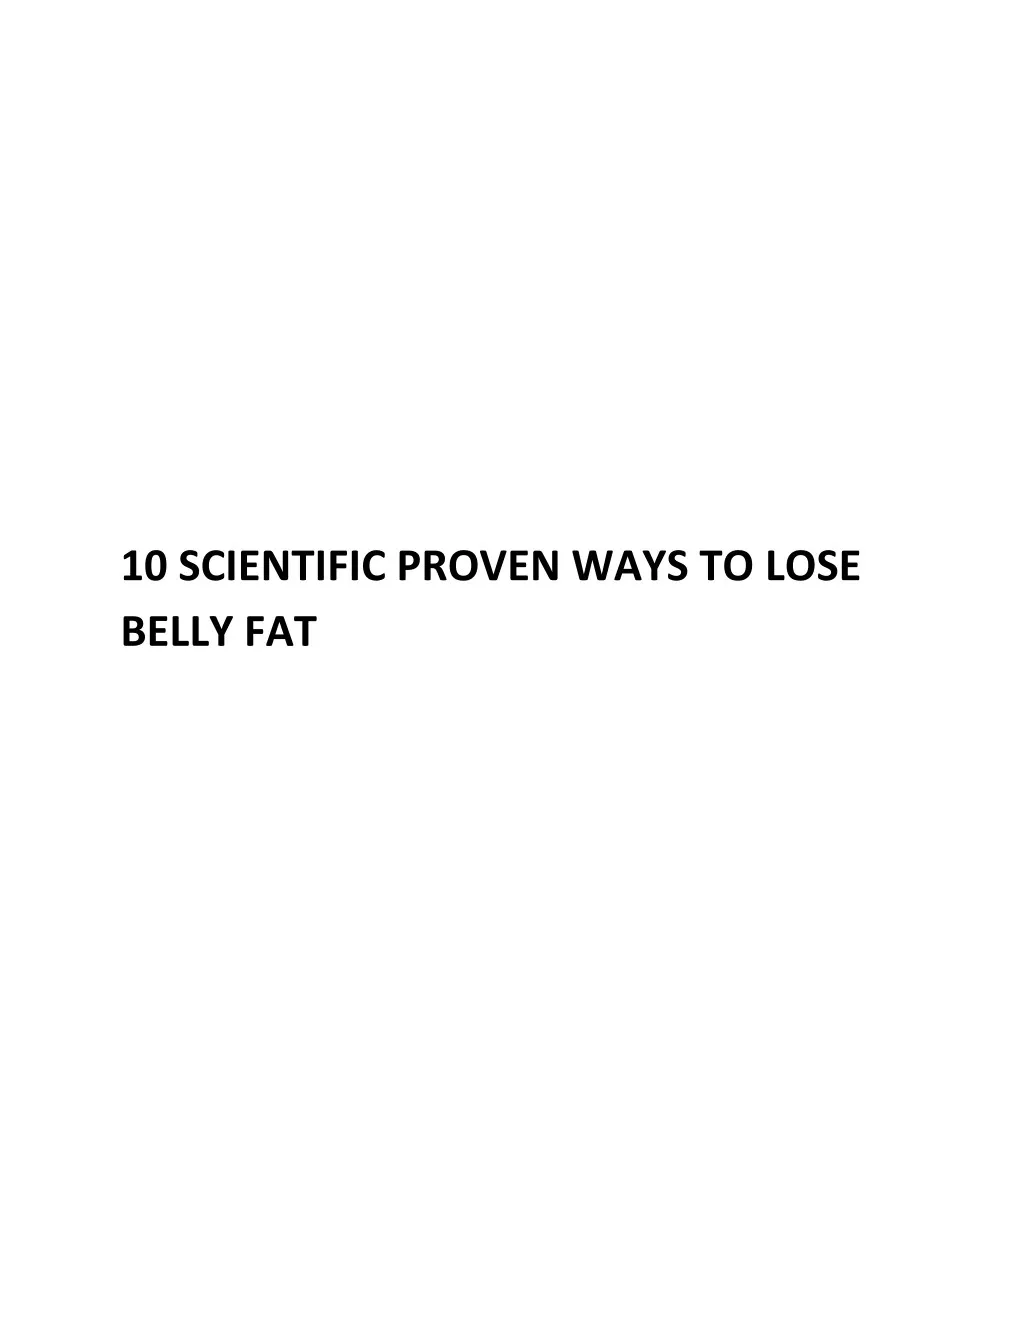 10 scientific proven ways to lose belly fat